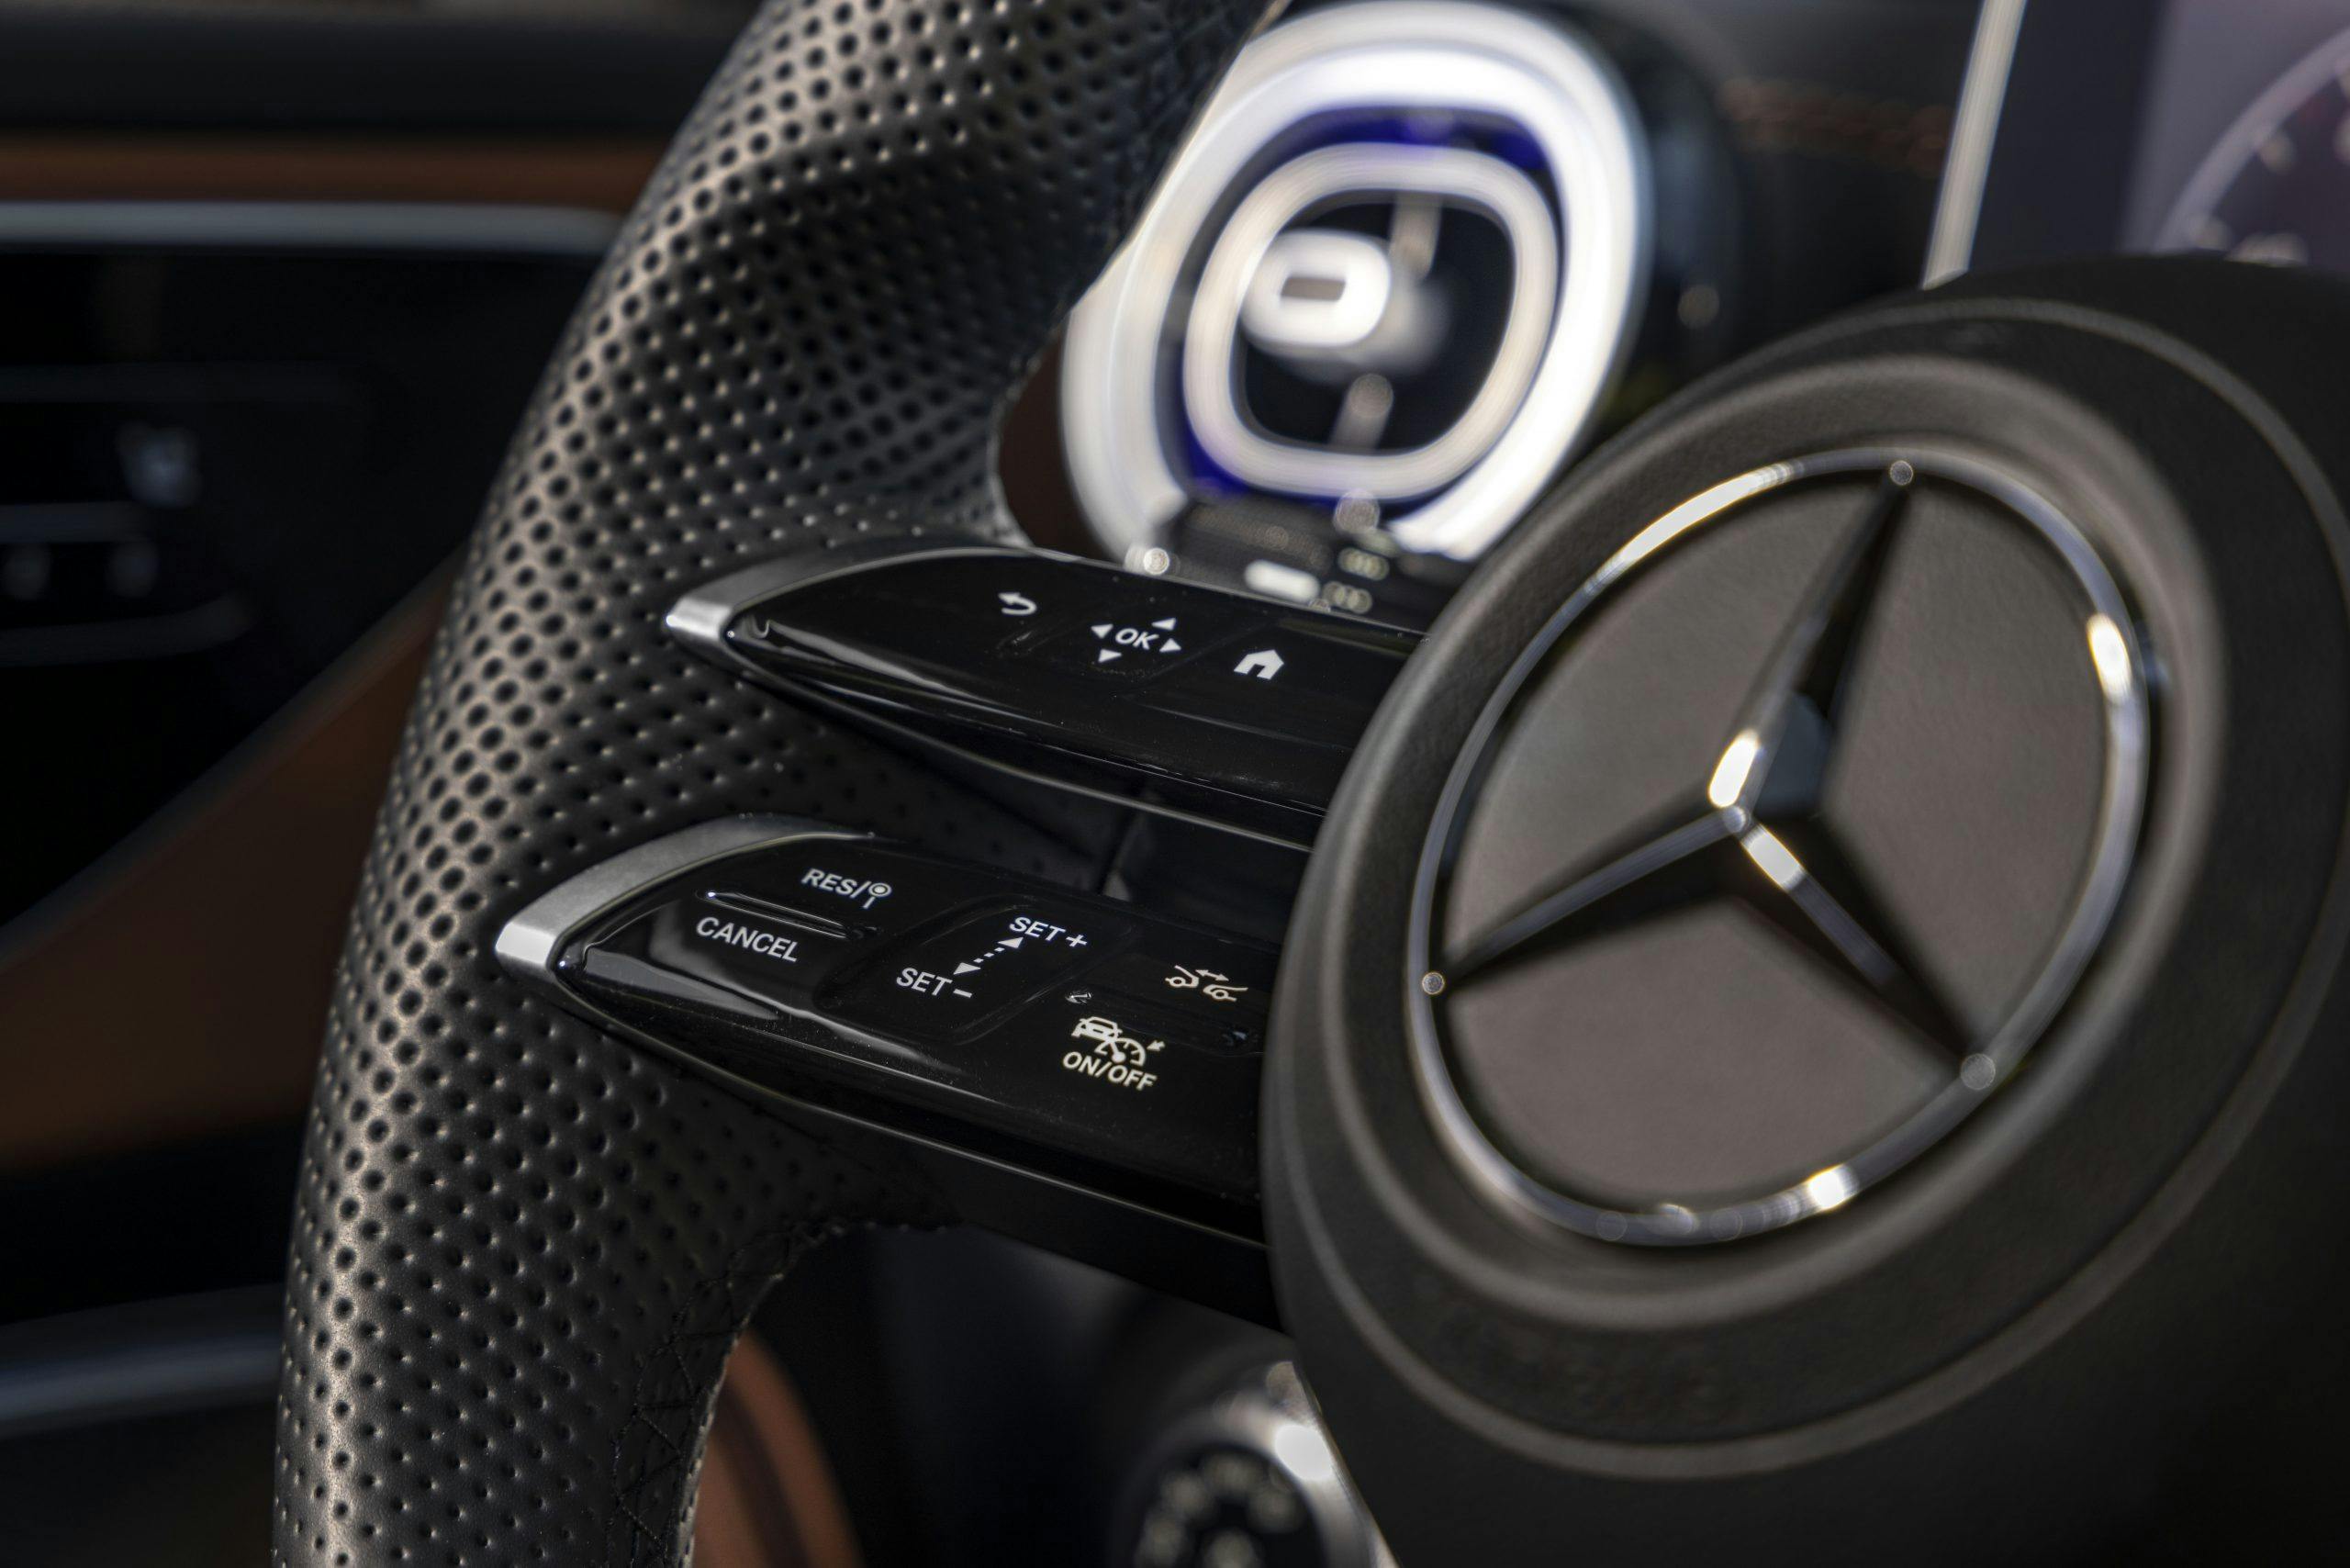 2022 Mercedes-Benz C-Class steering wheel with logo